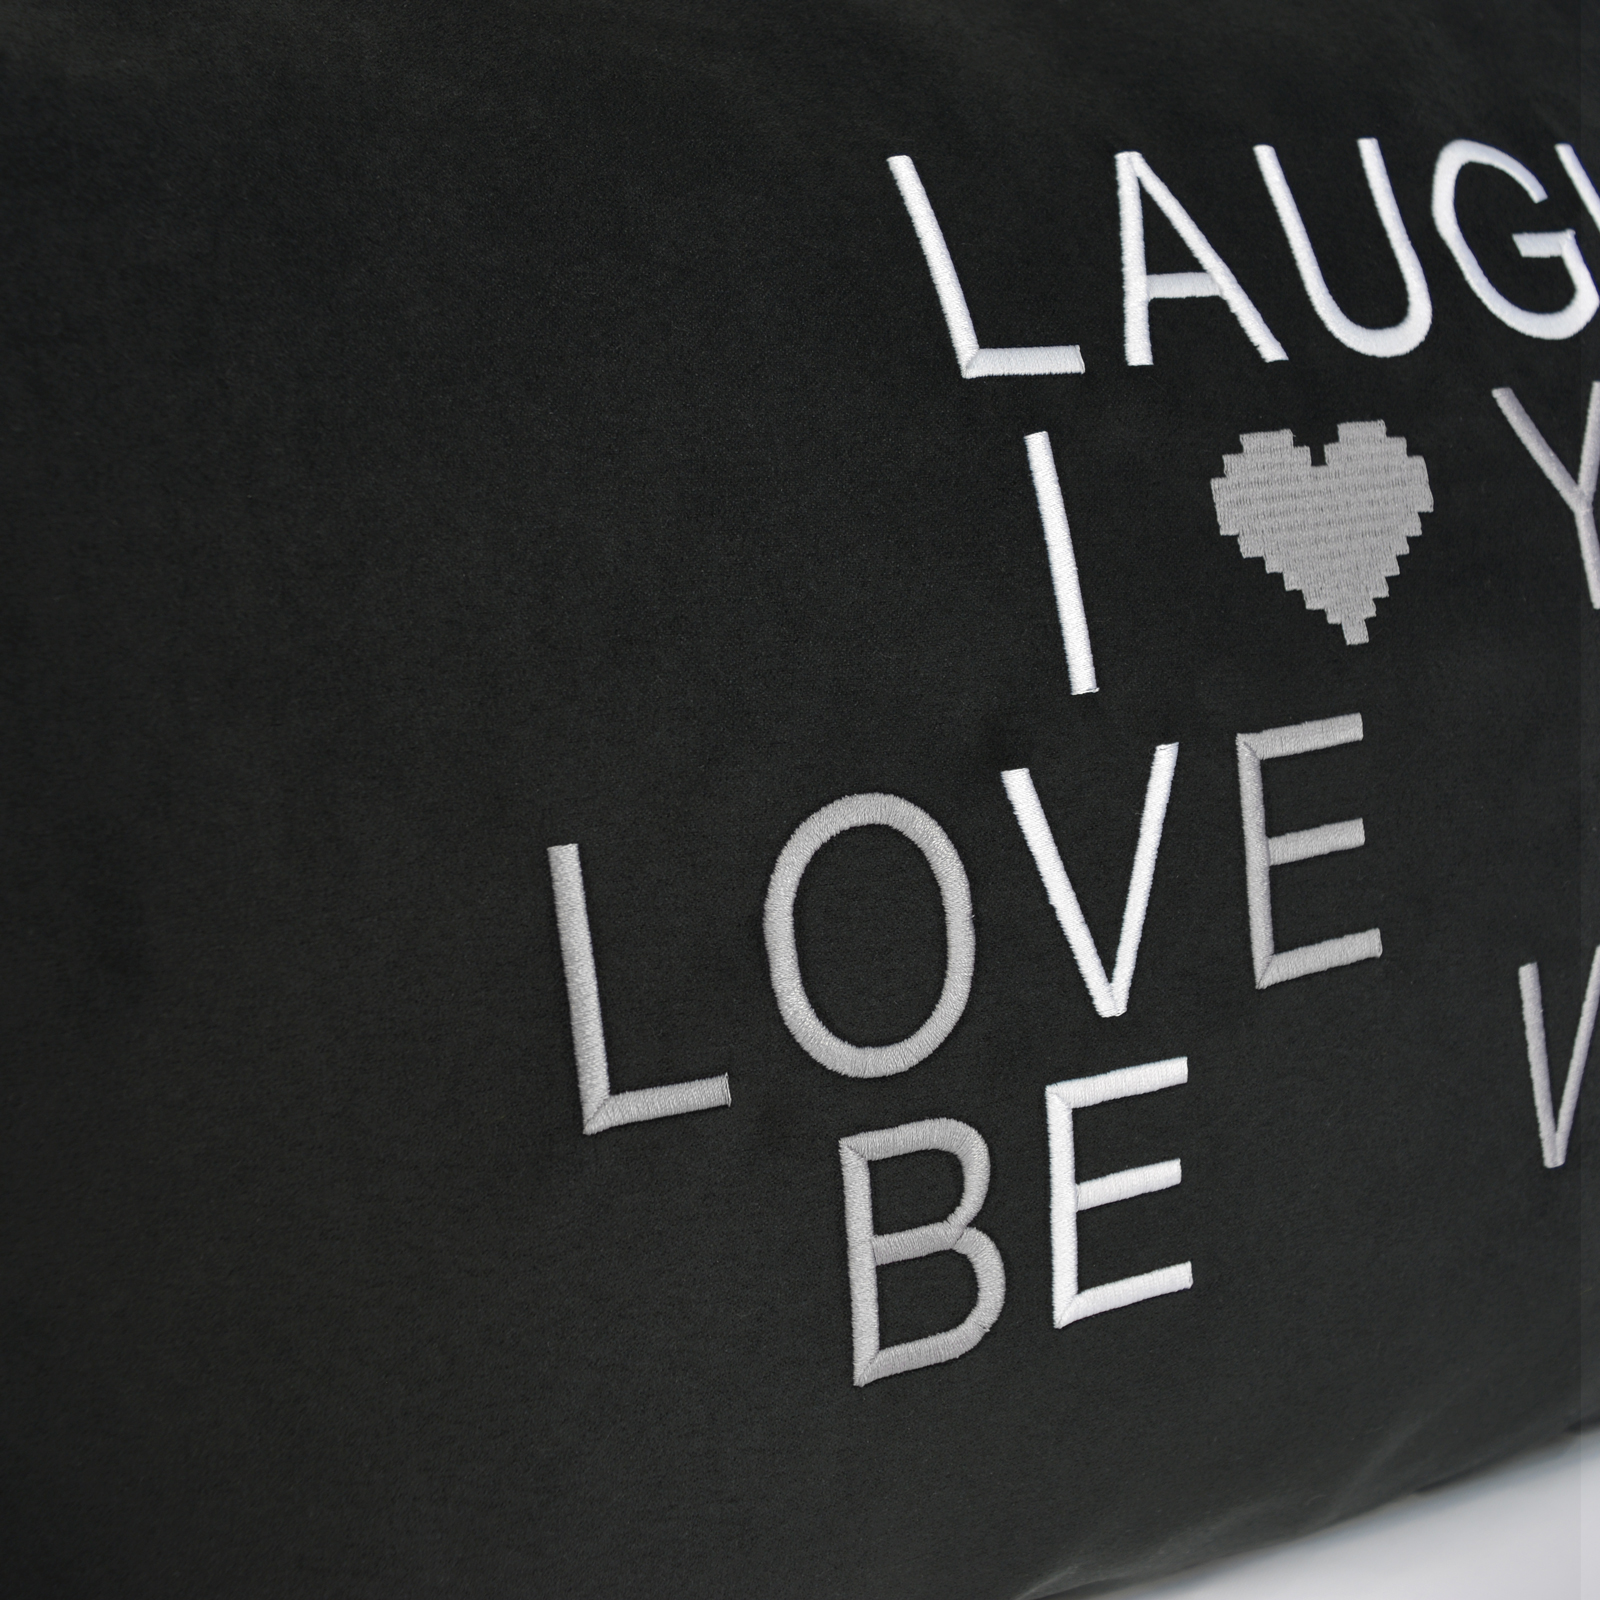 Laugh - I love you - Love me - be we - Kissen